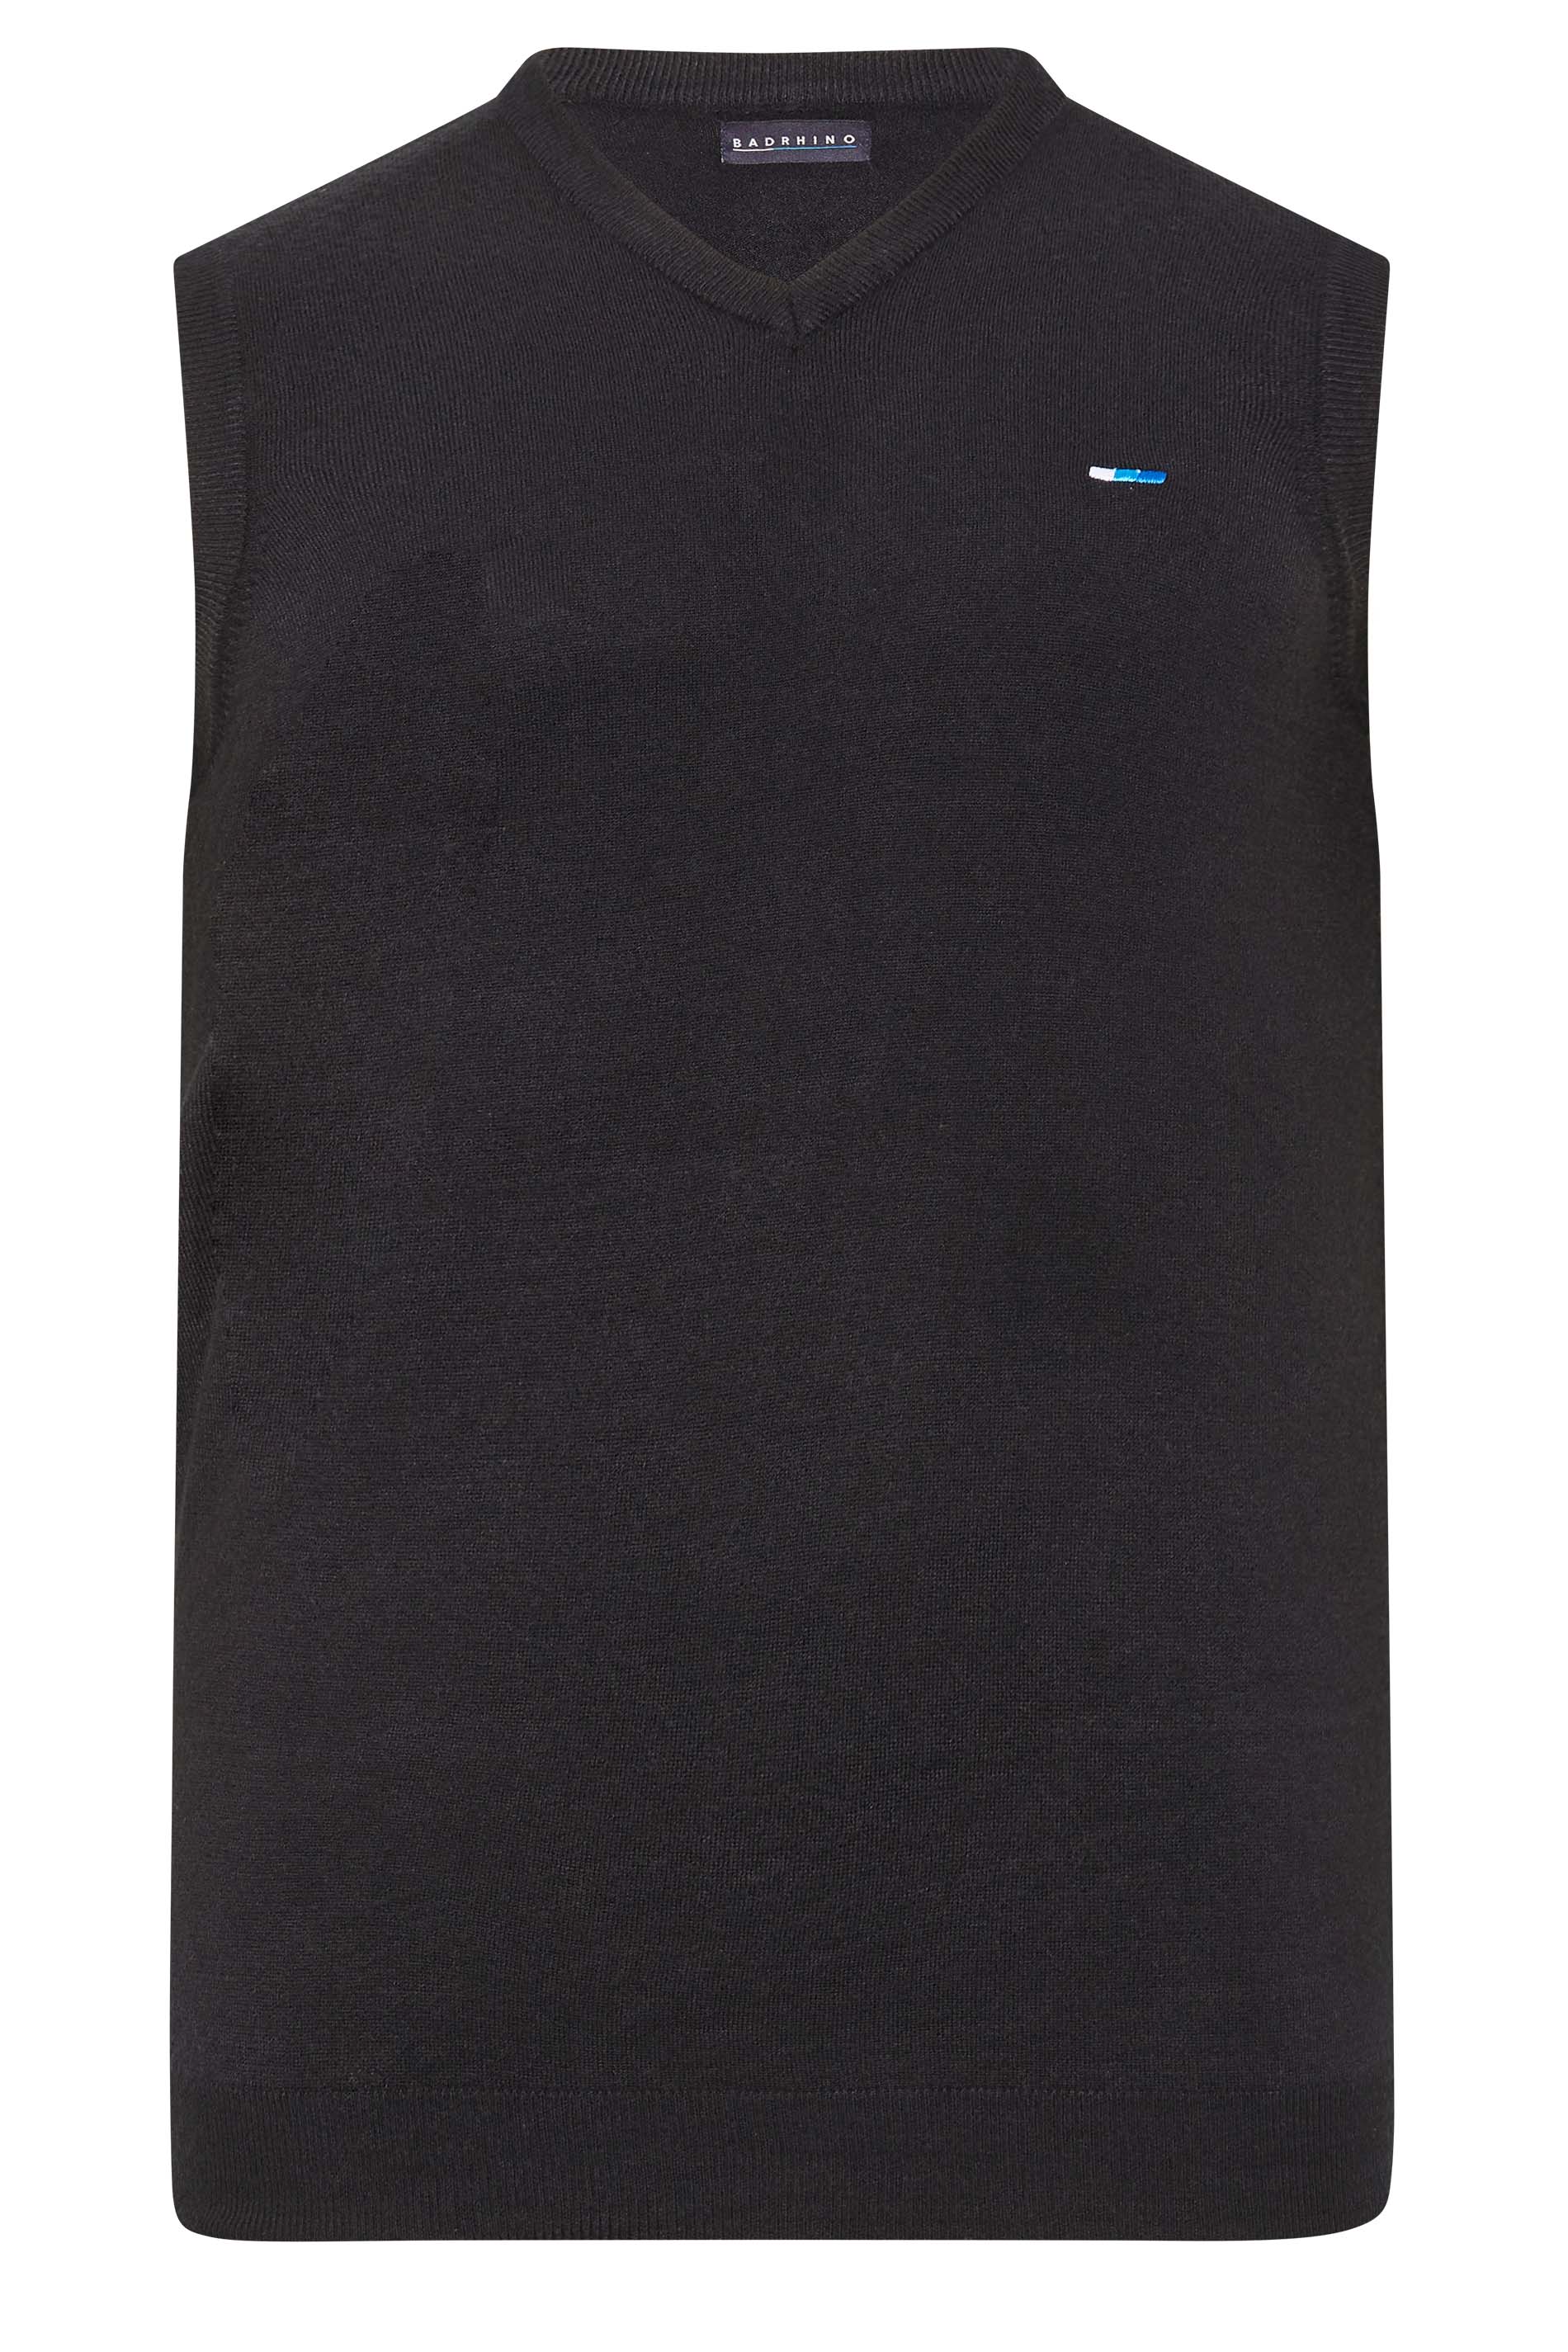 BadRhino Navy Blue Essential Sleeveless Knitted Jumper | BadRhino 3